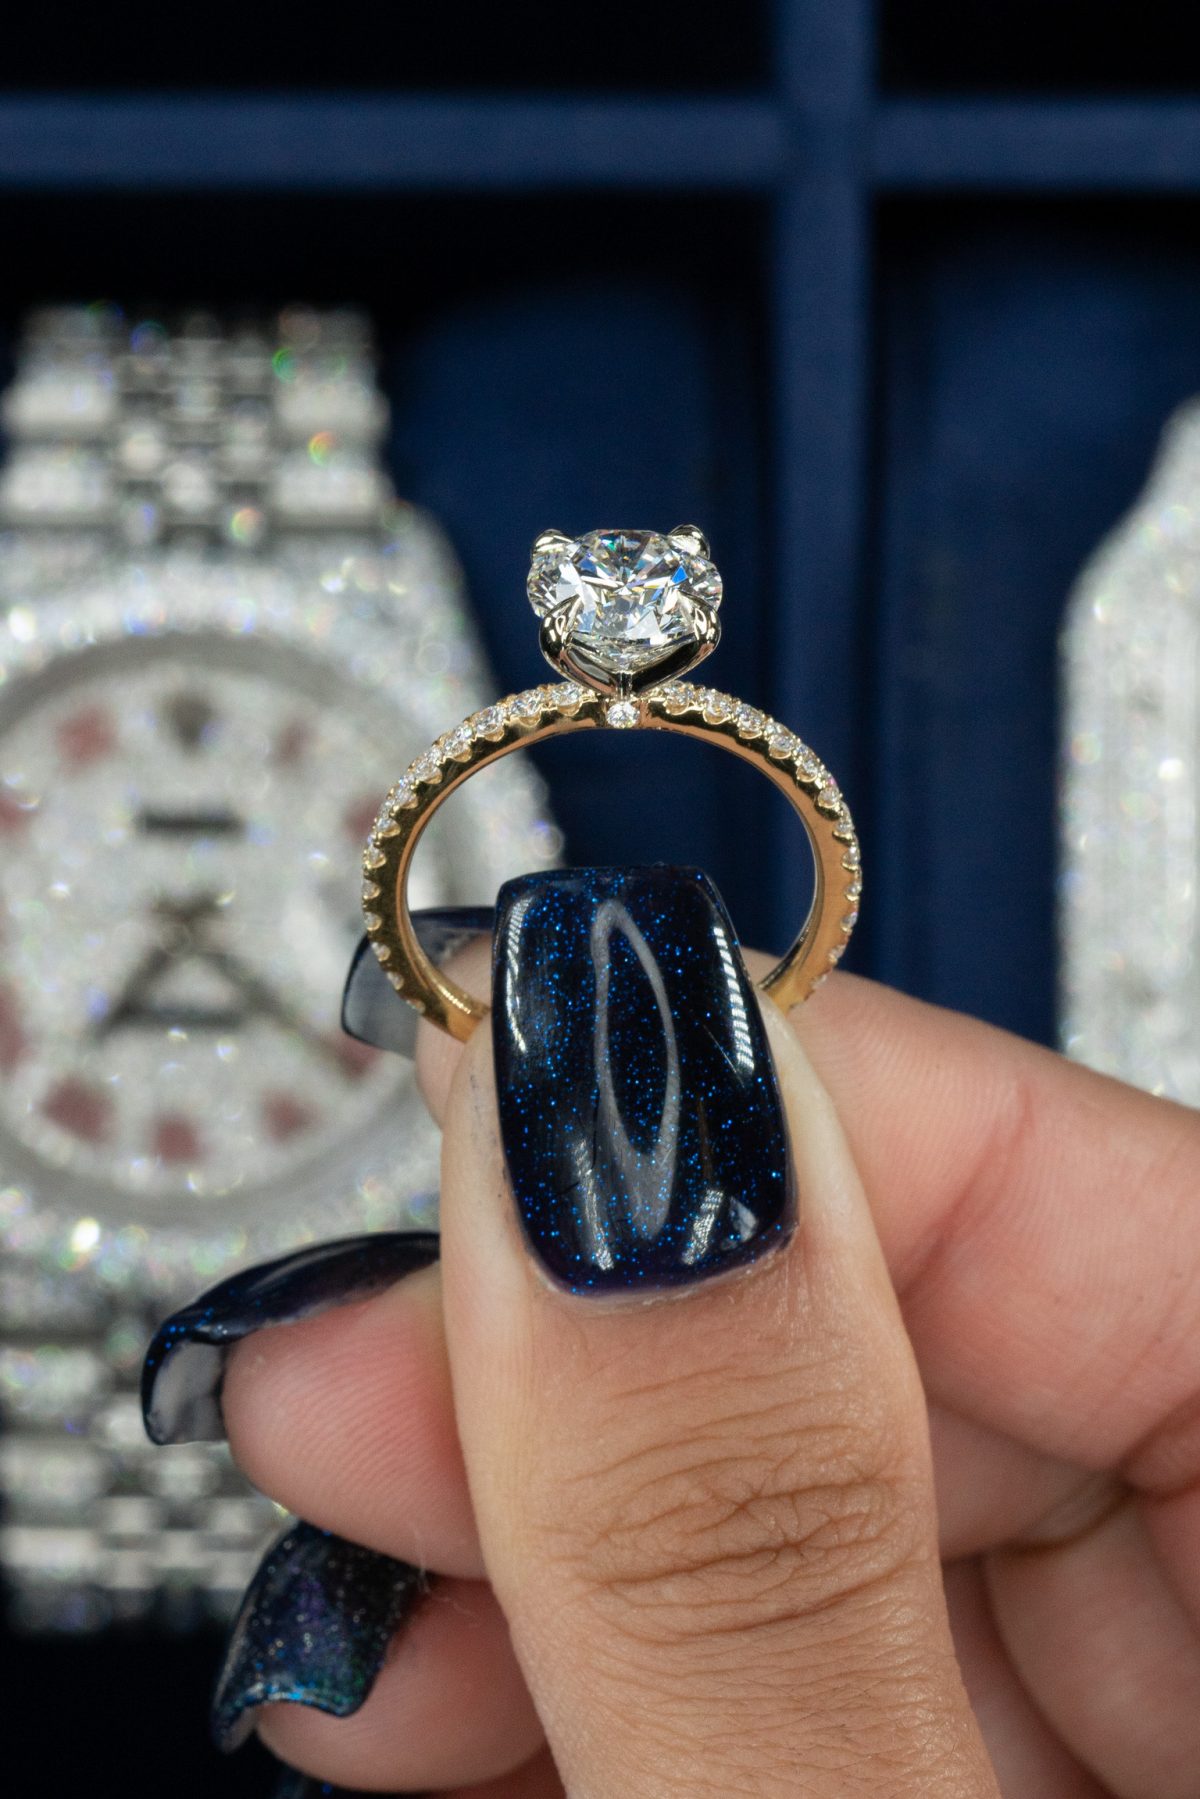 5.30 carat round diamond engagement ring